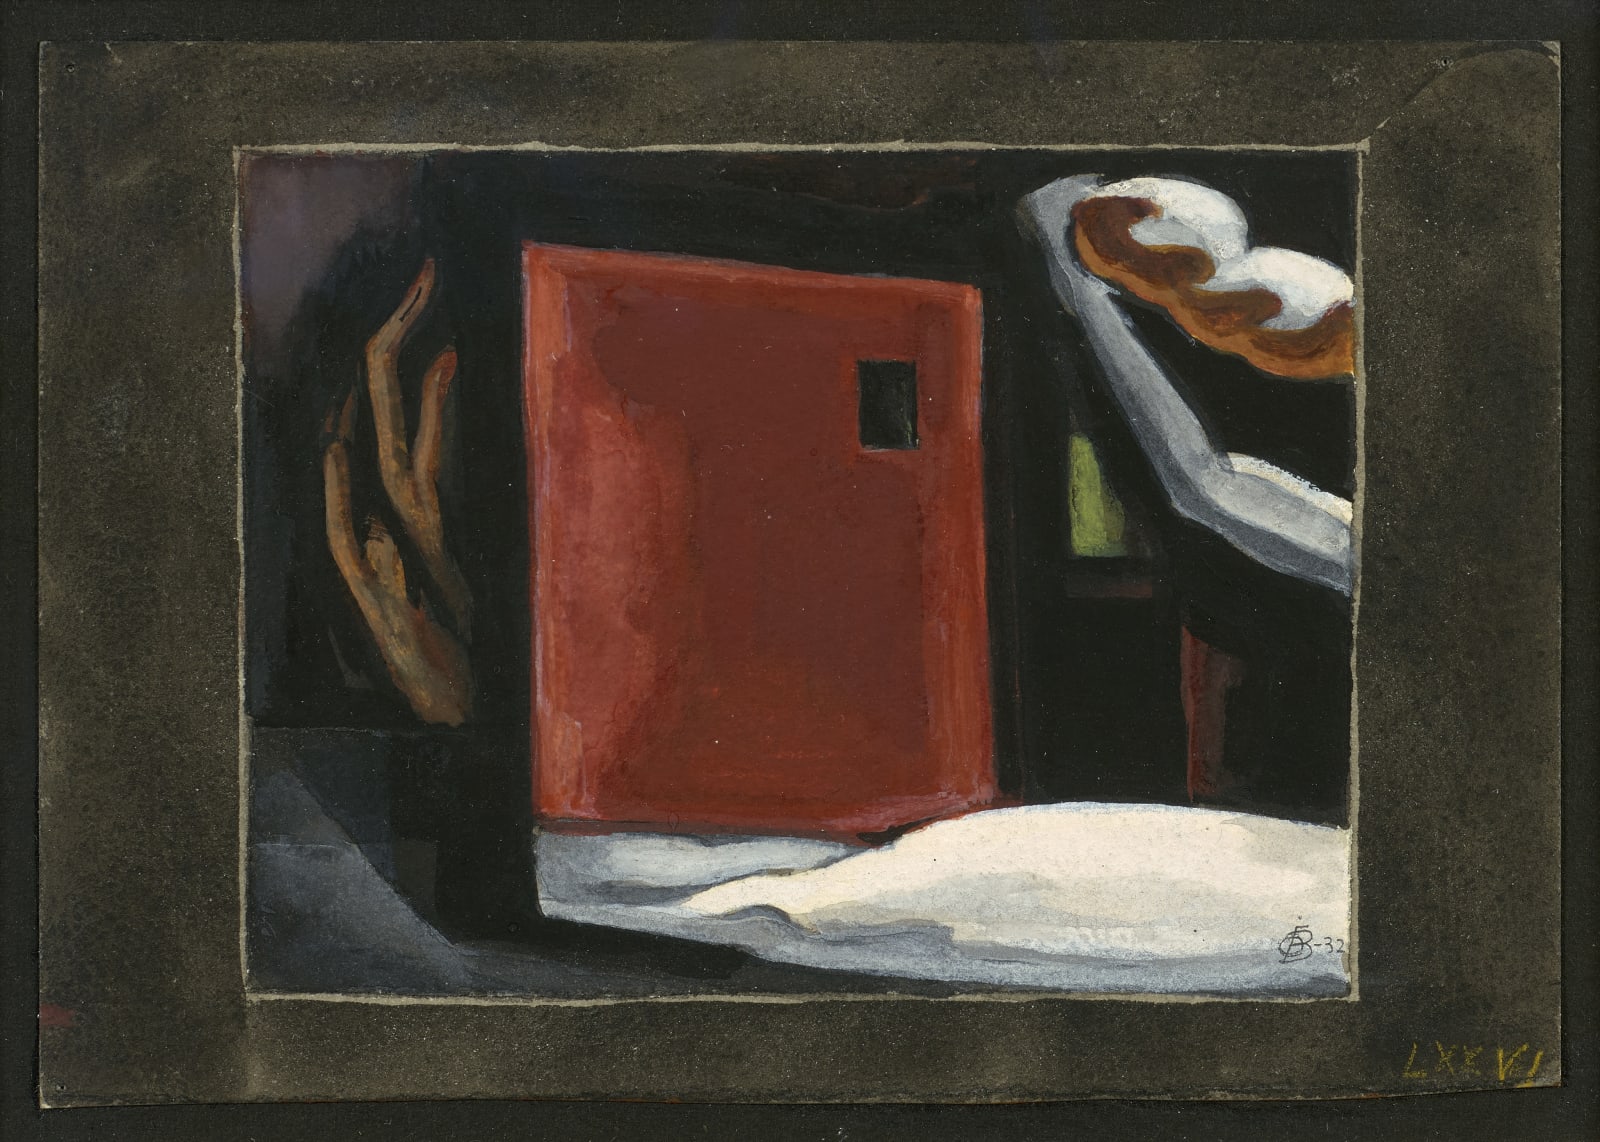 Oscar Bluemner, Study for "In Low Key", 1932